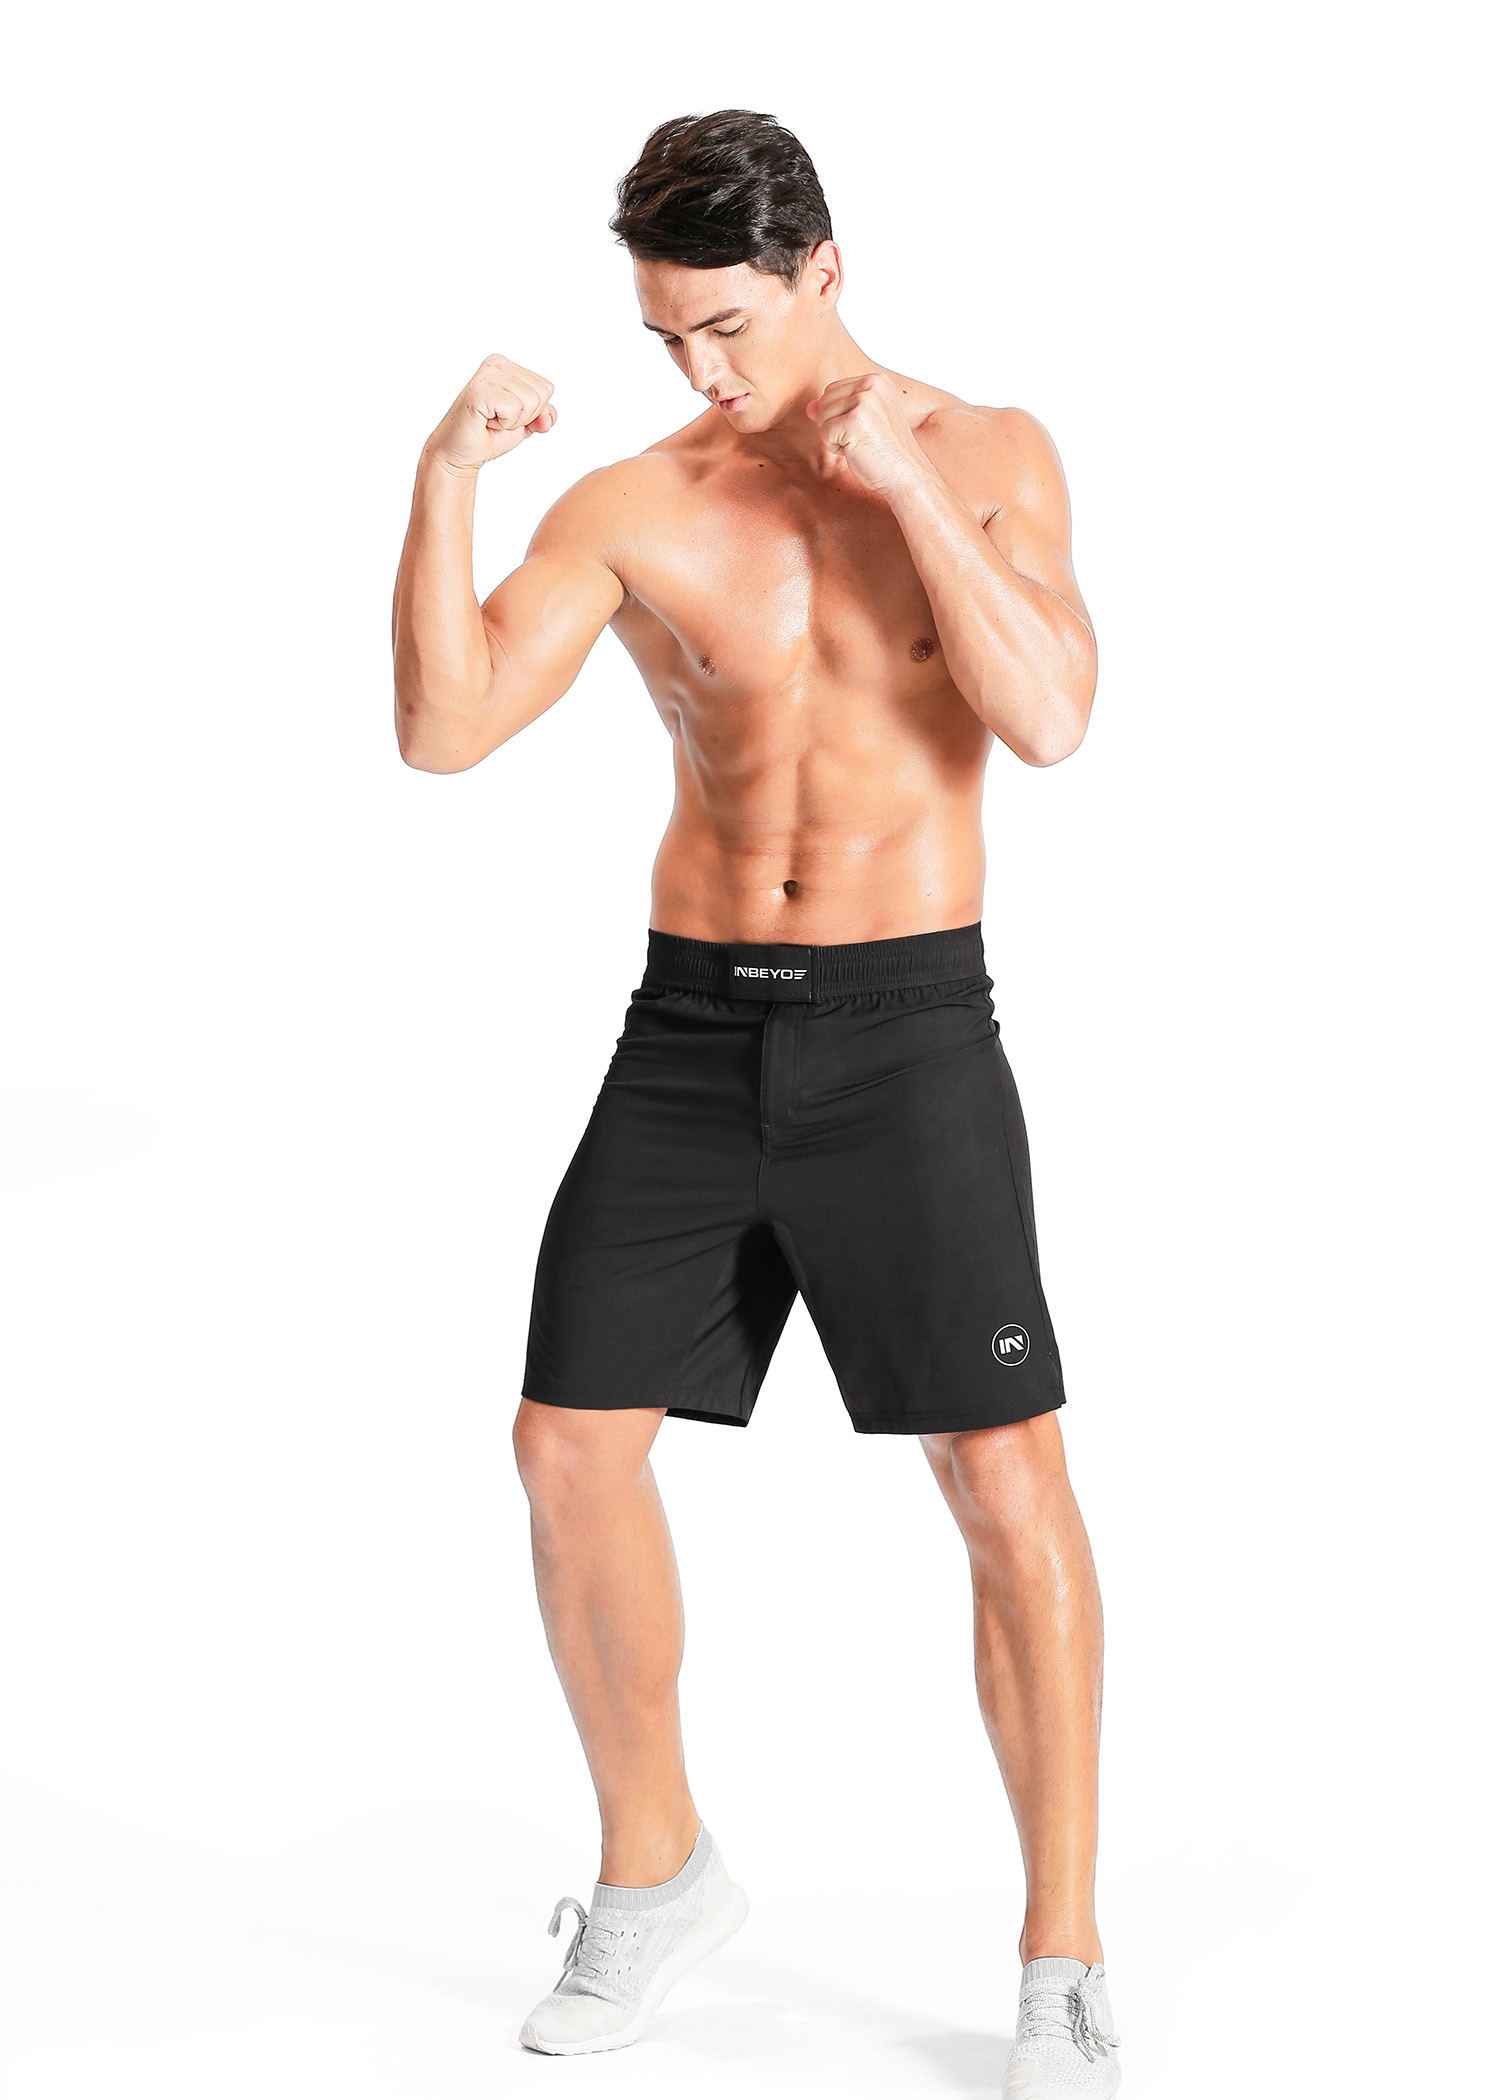 UFC fight boxing shorts – www.inbeyo.com